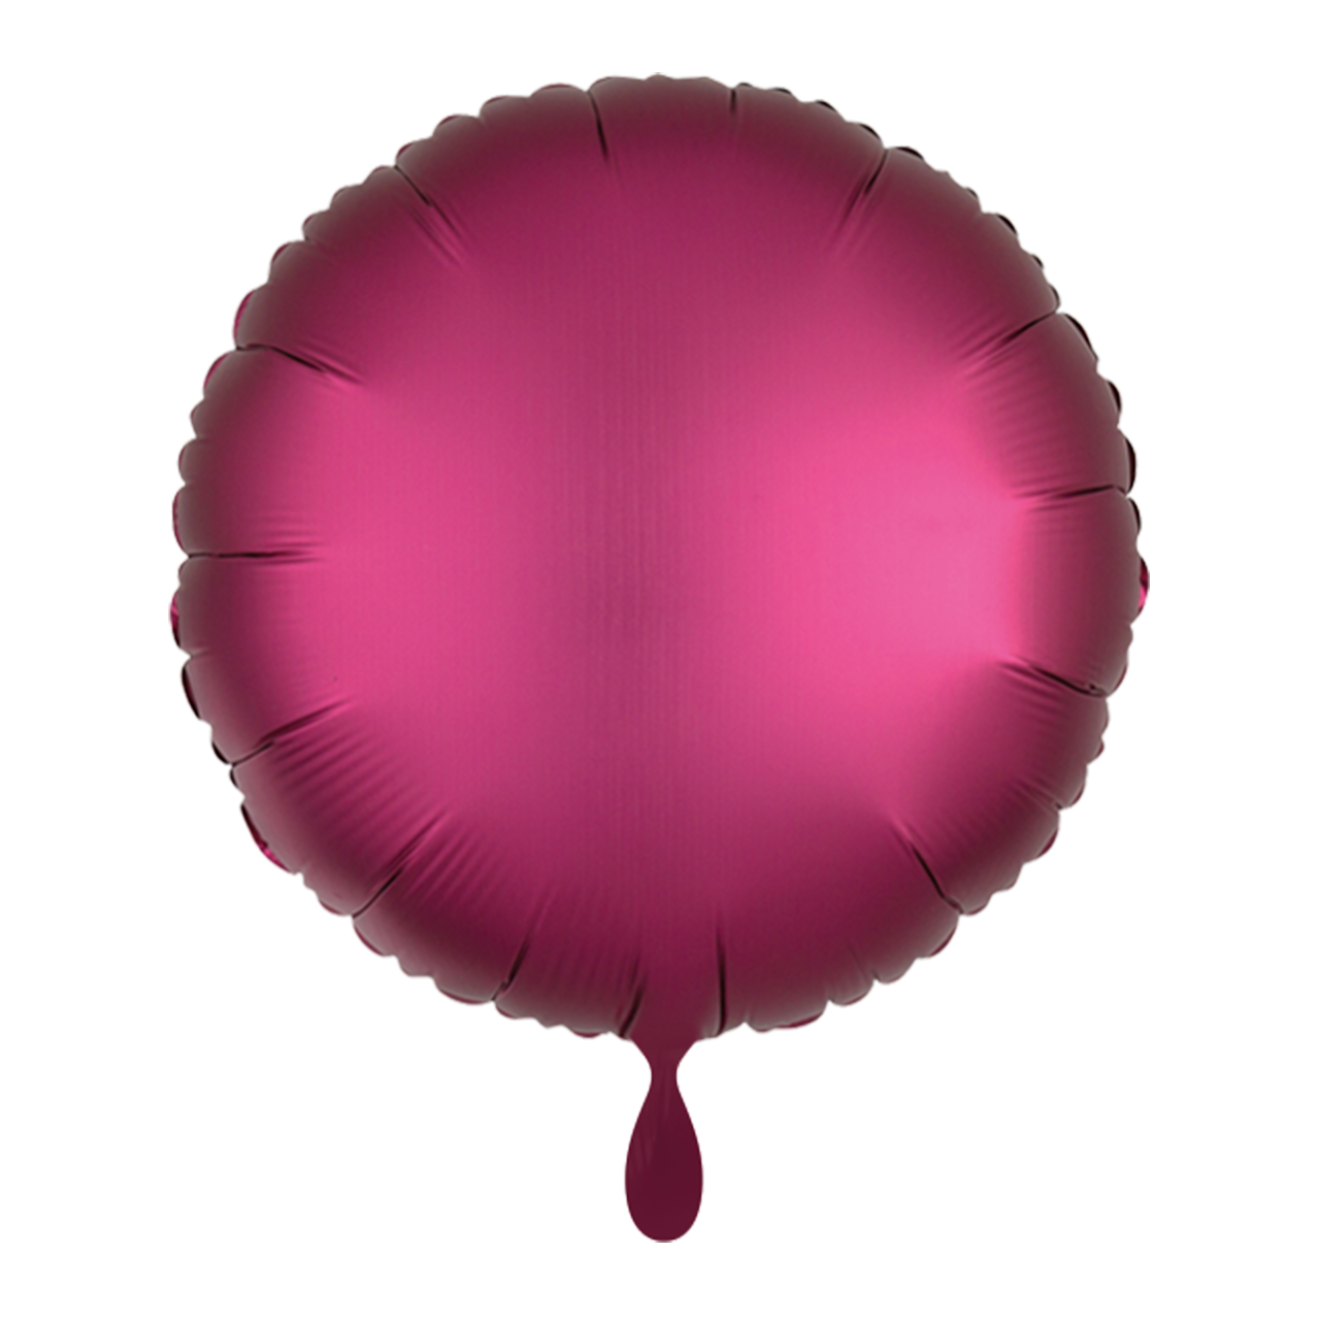 1 Ballon - Rund - Satin - Pink